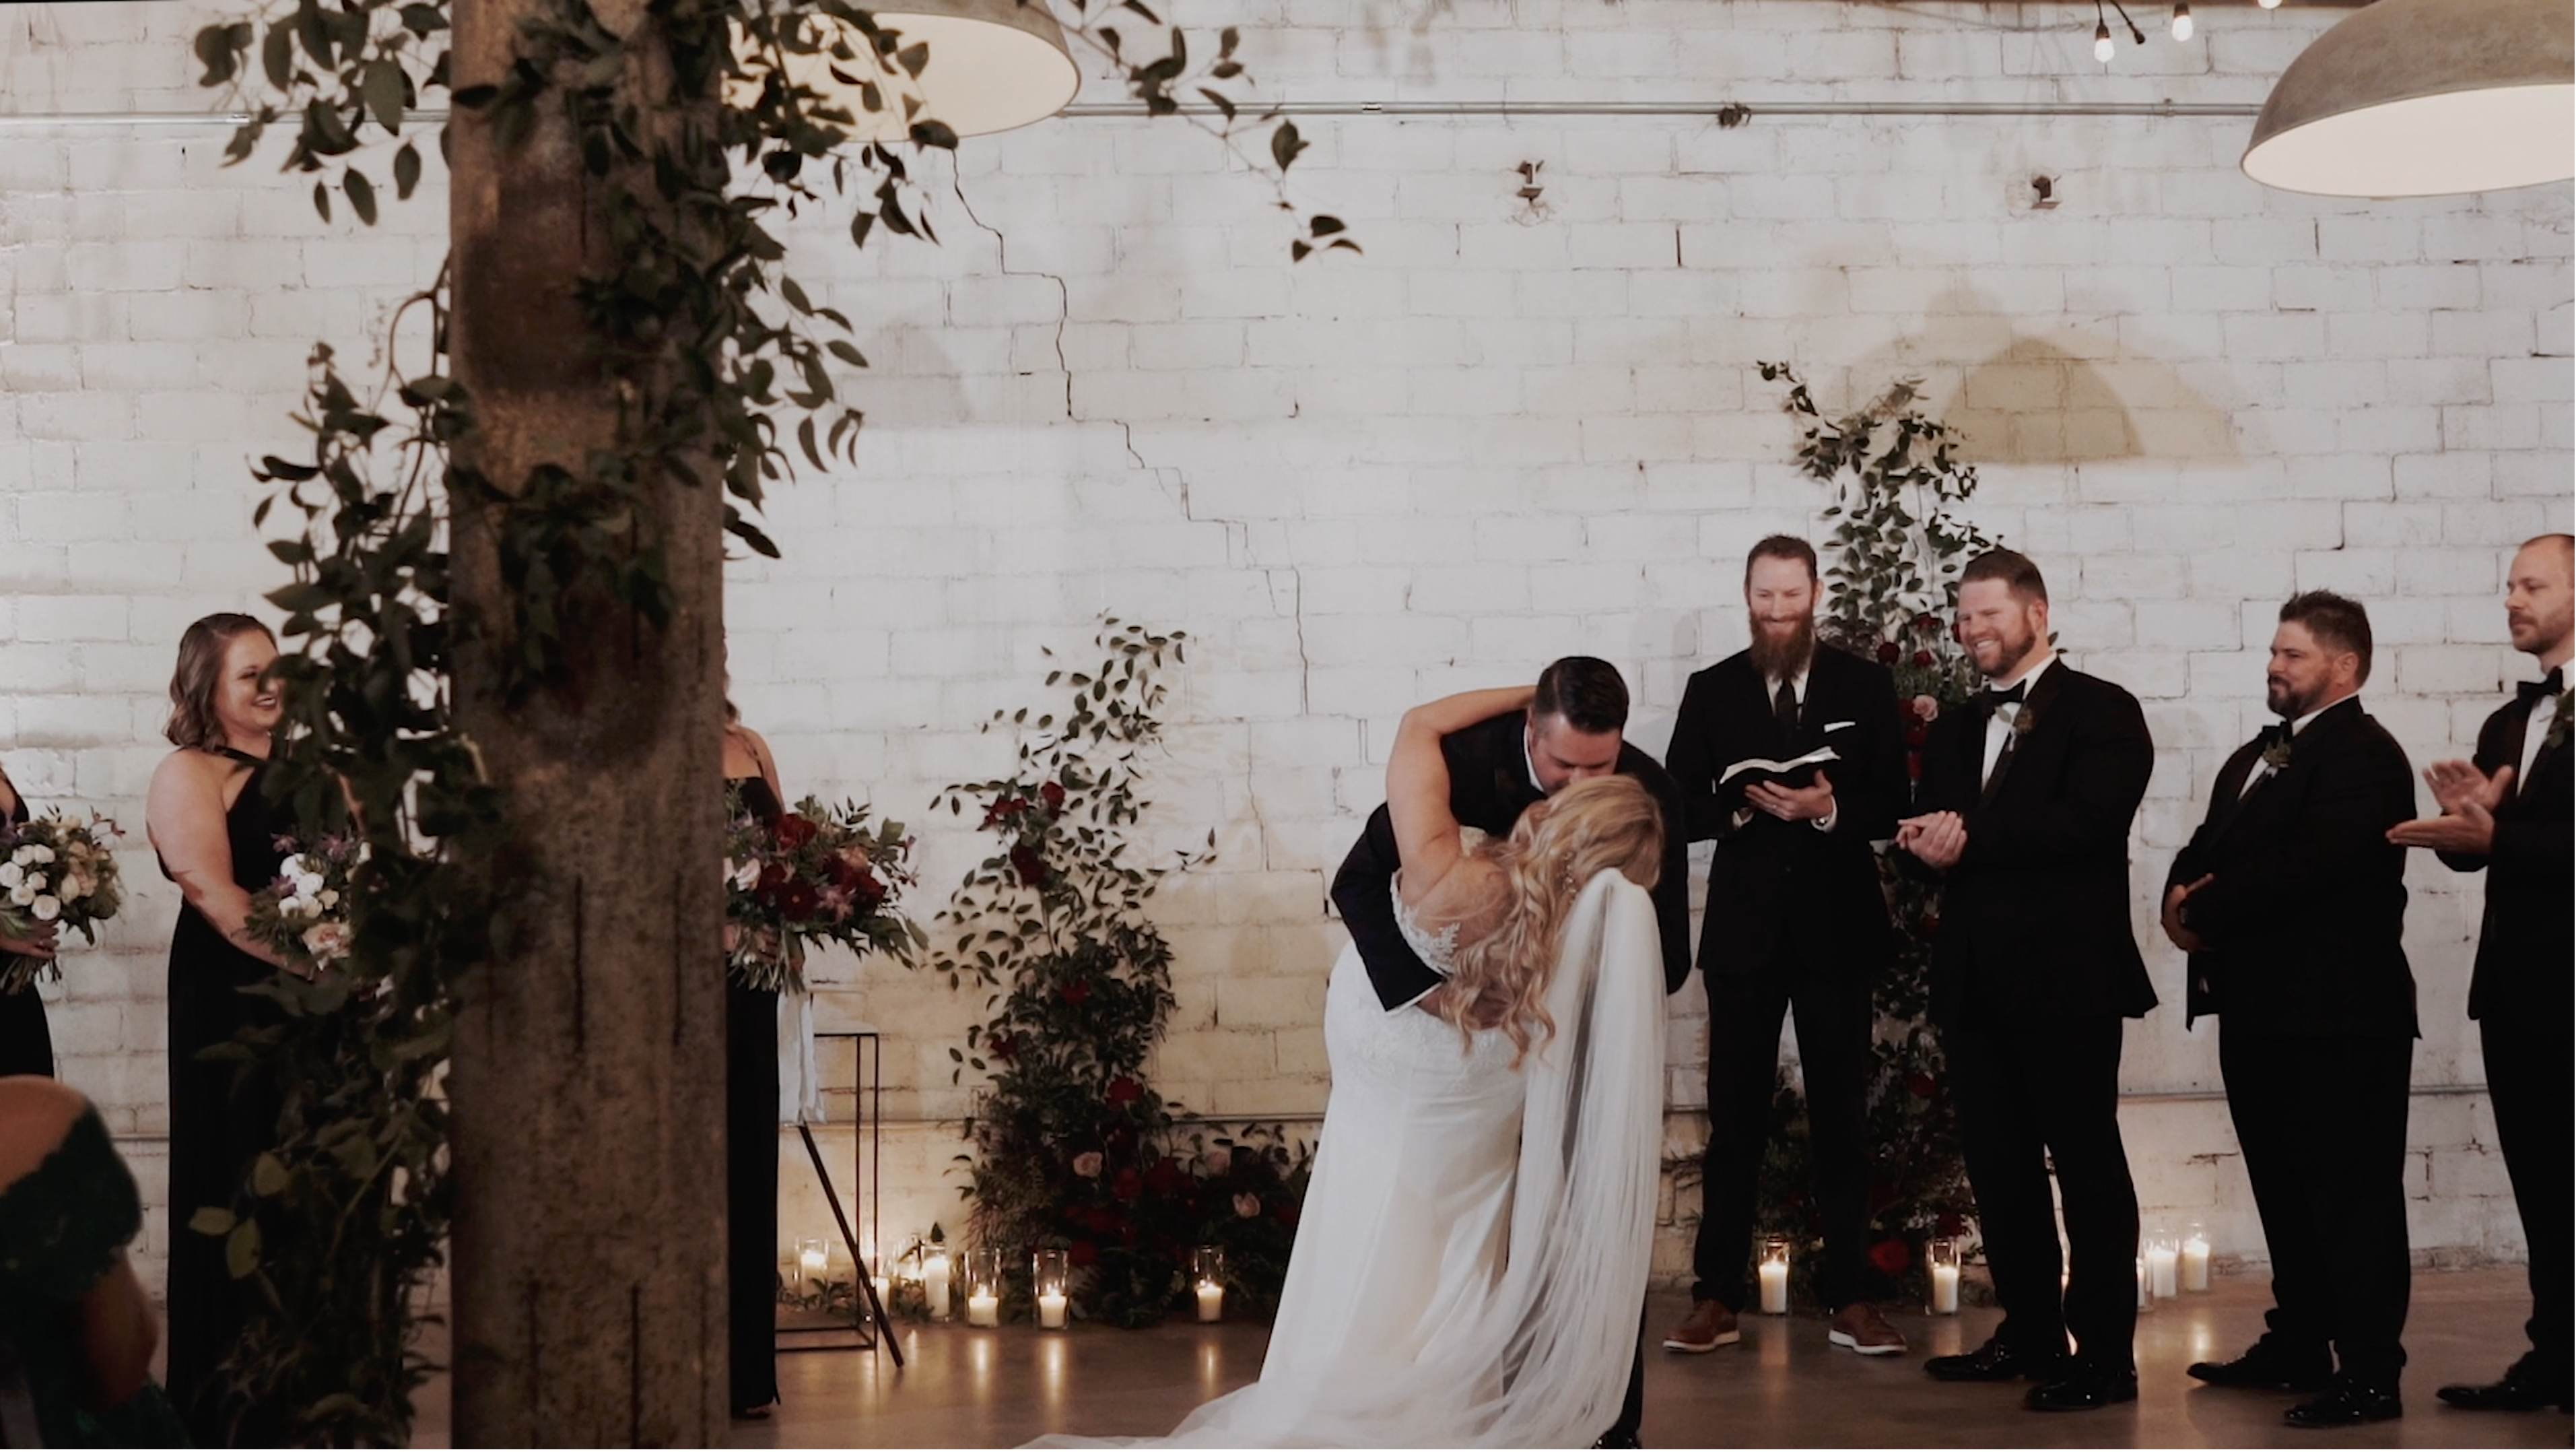 Dallas wedding videographers Everlasting Wedding Films